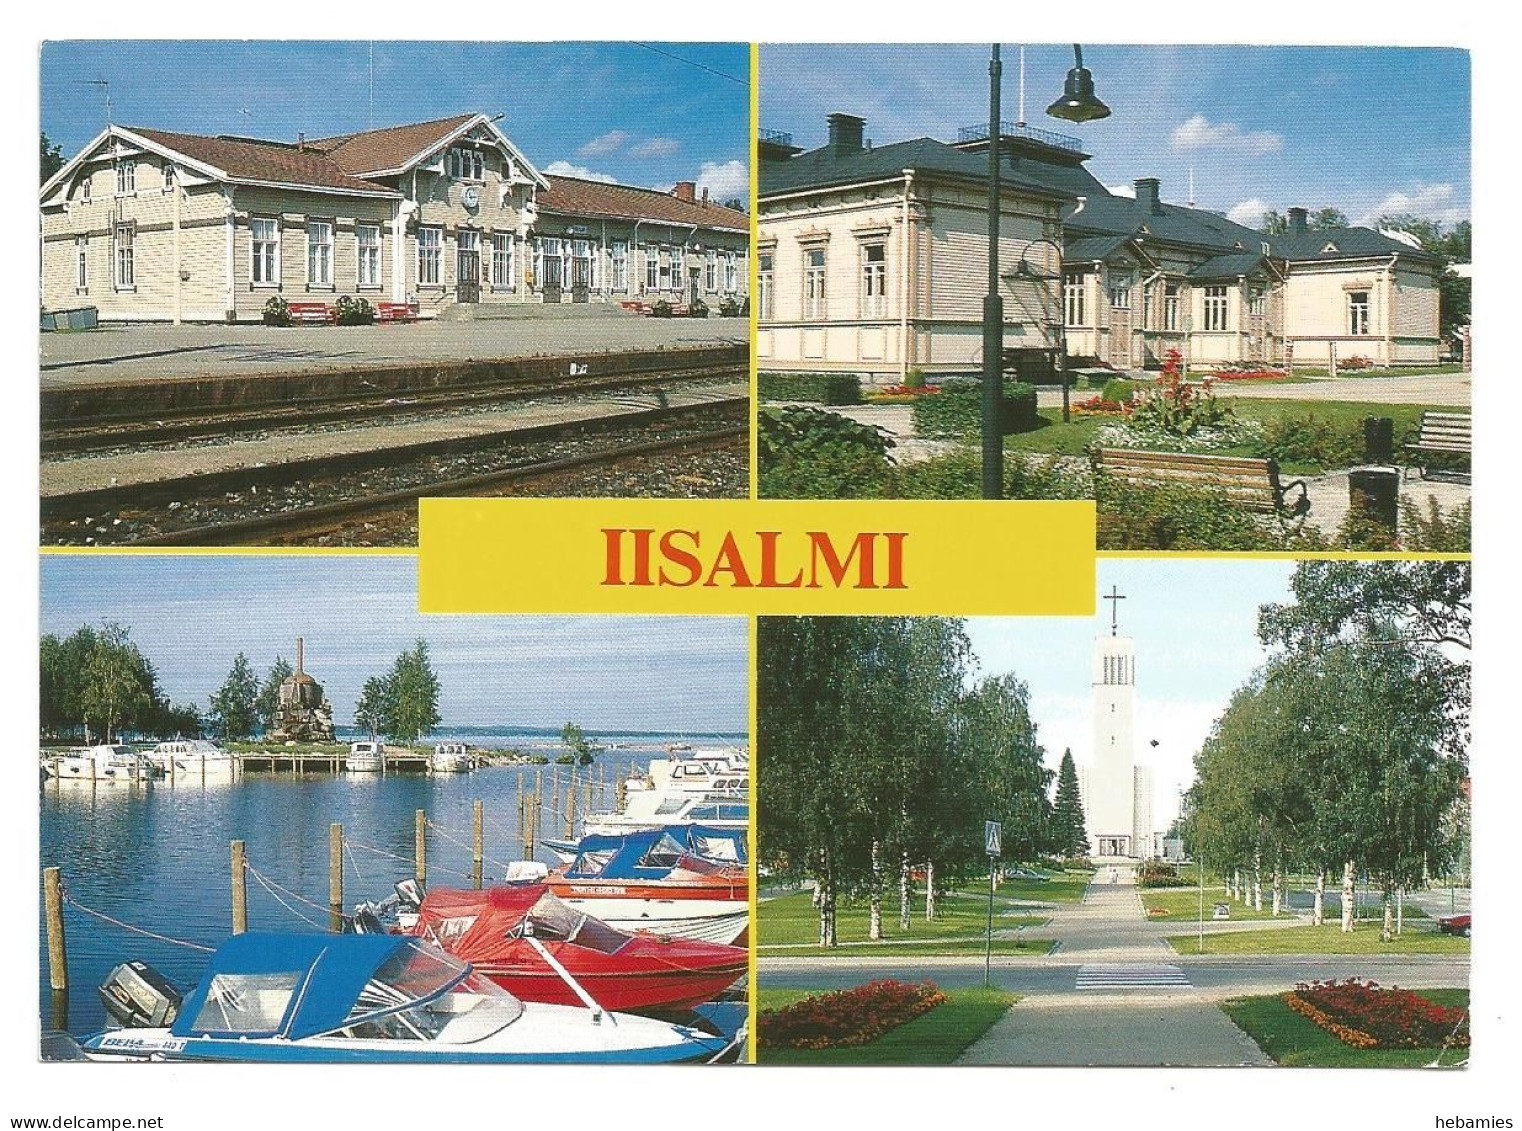 IISALMI - FINLAND - Finland